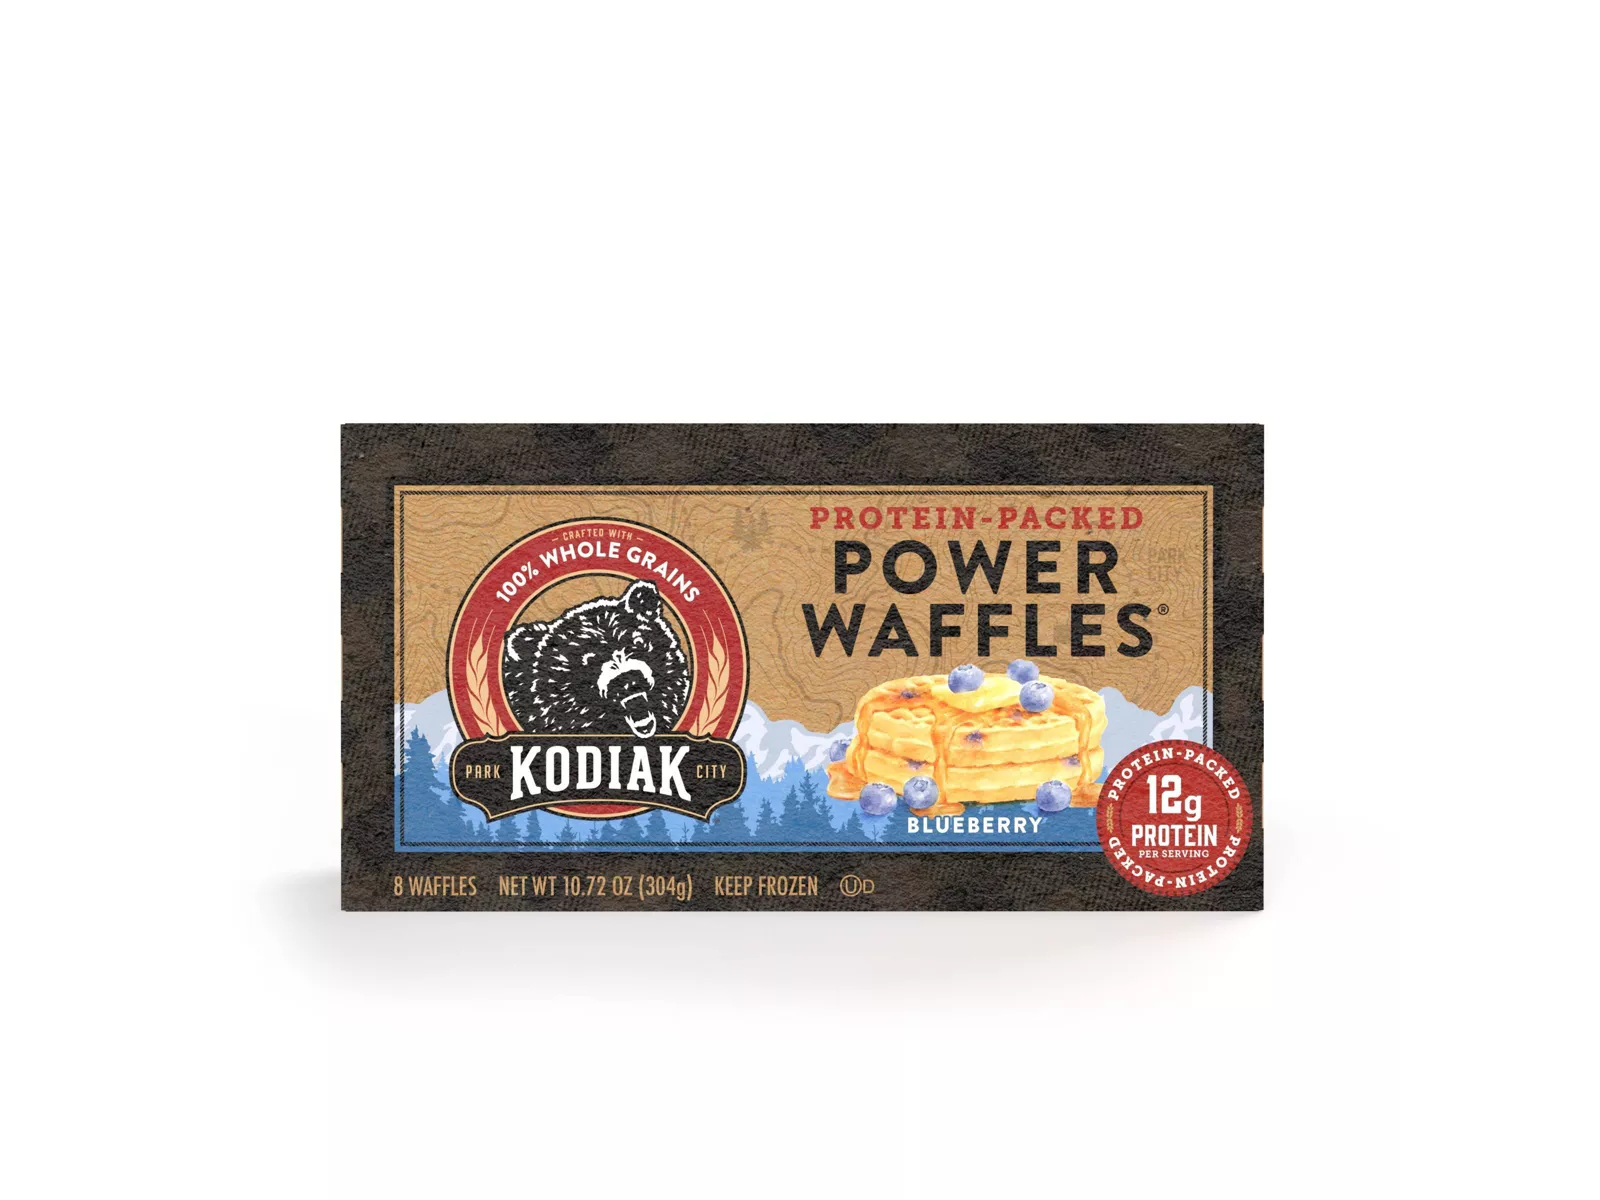 Kodiak Protein-Packed Power Waffles Blueberry Frozen Waffles